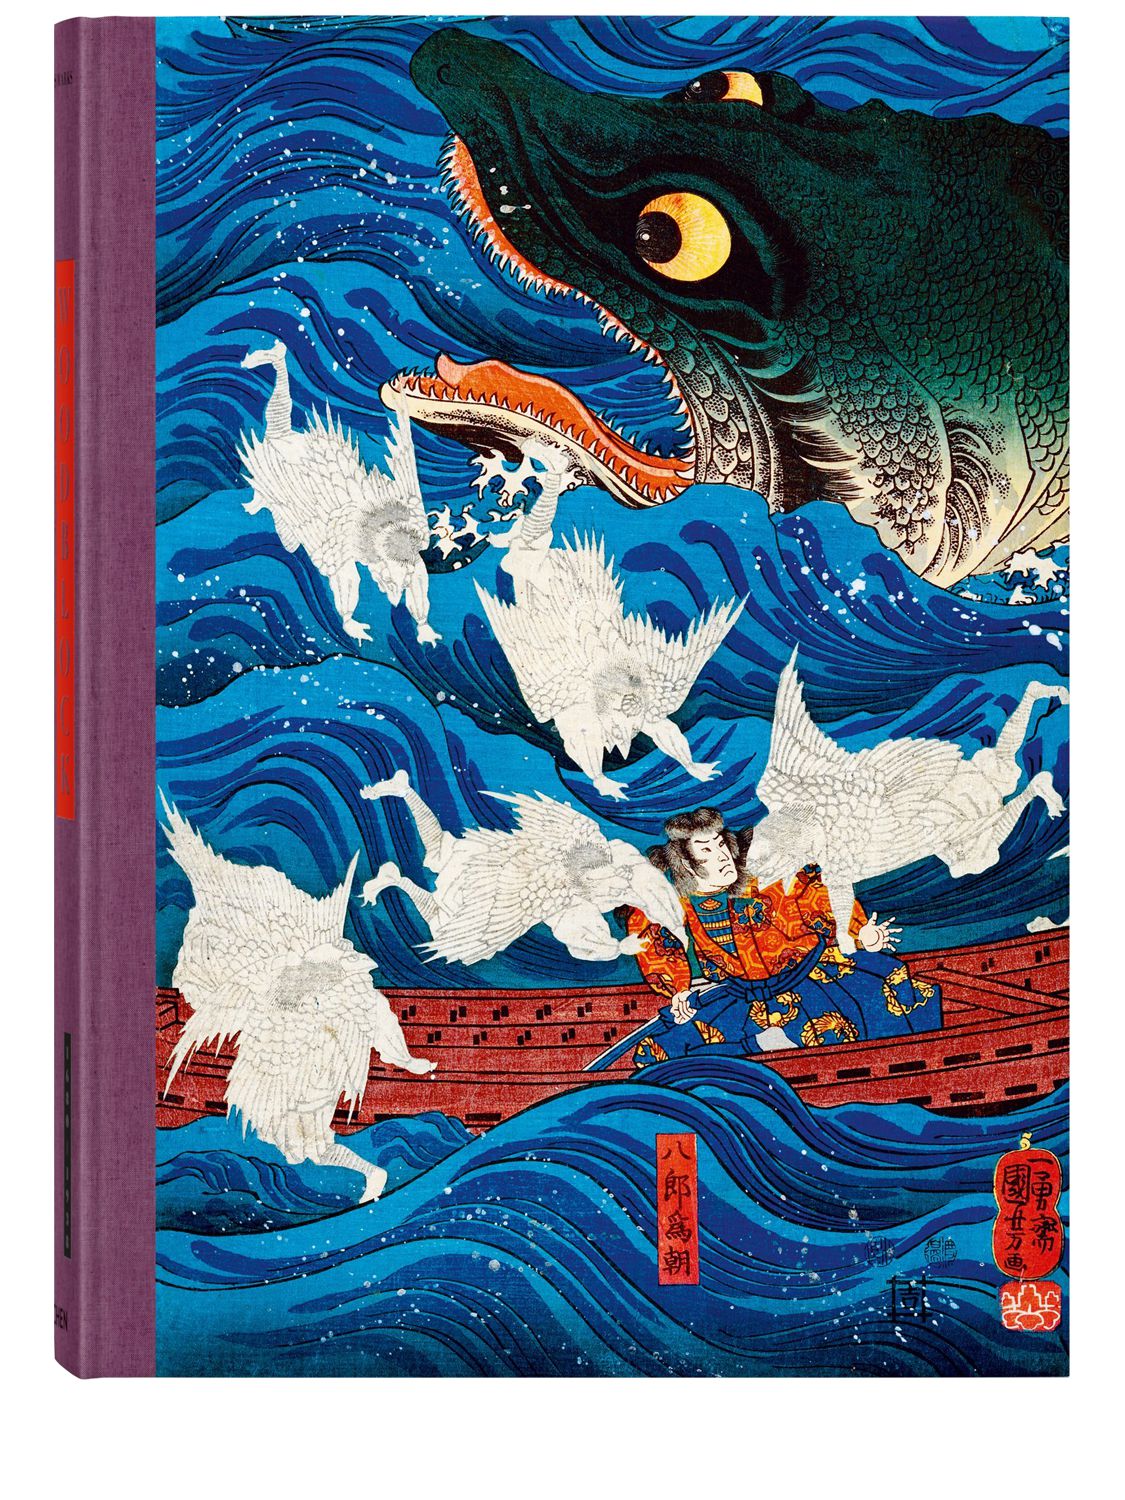 Taschen Japanese Woodblock Prints In Multicolor